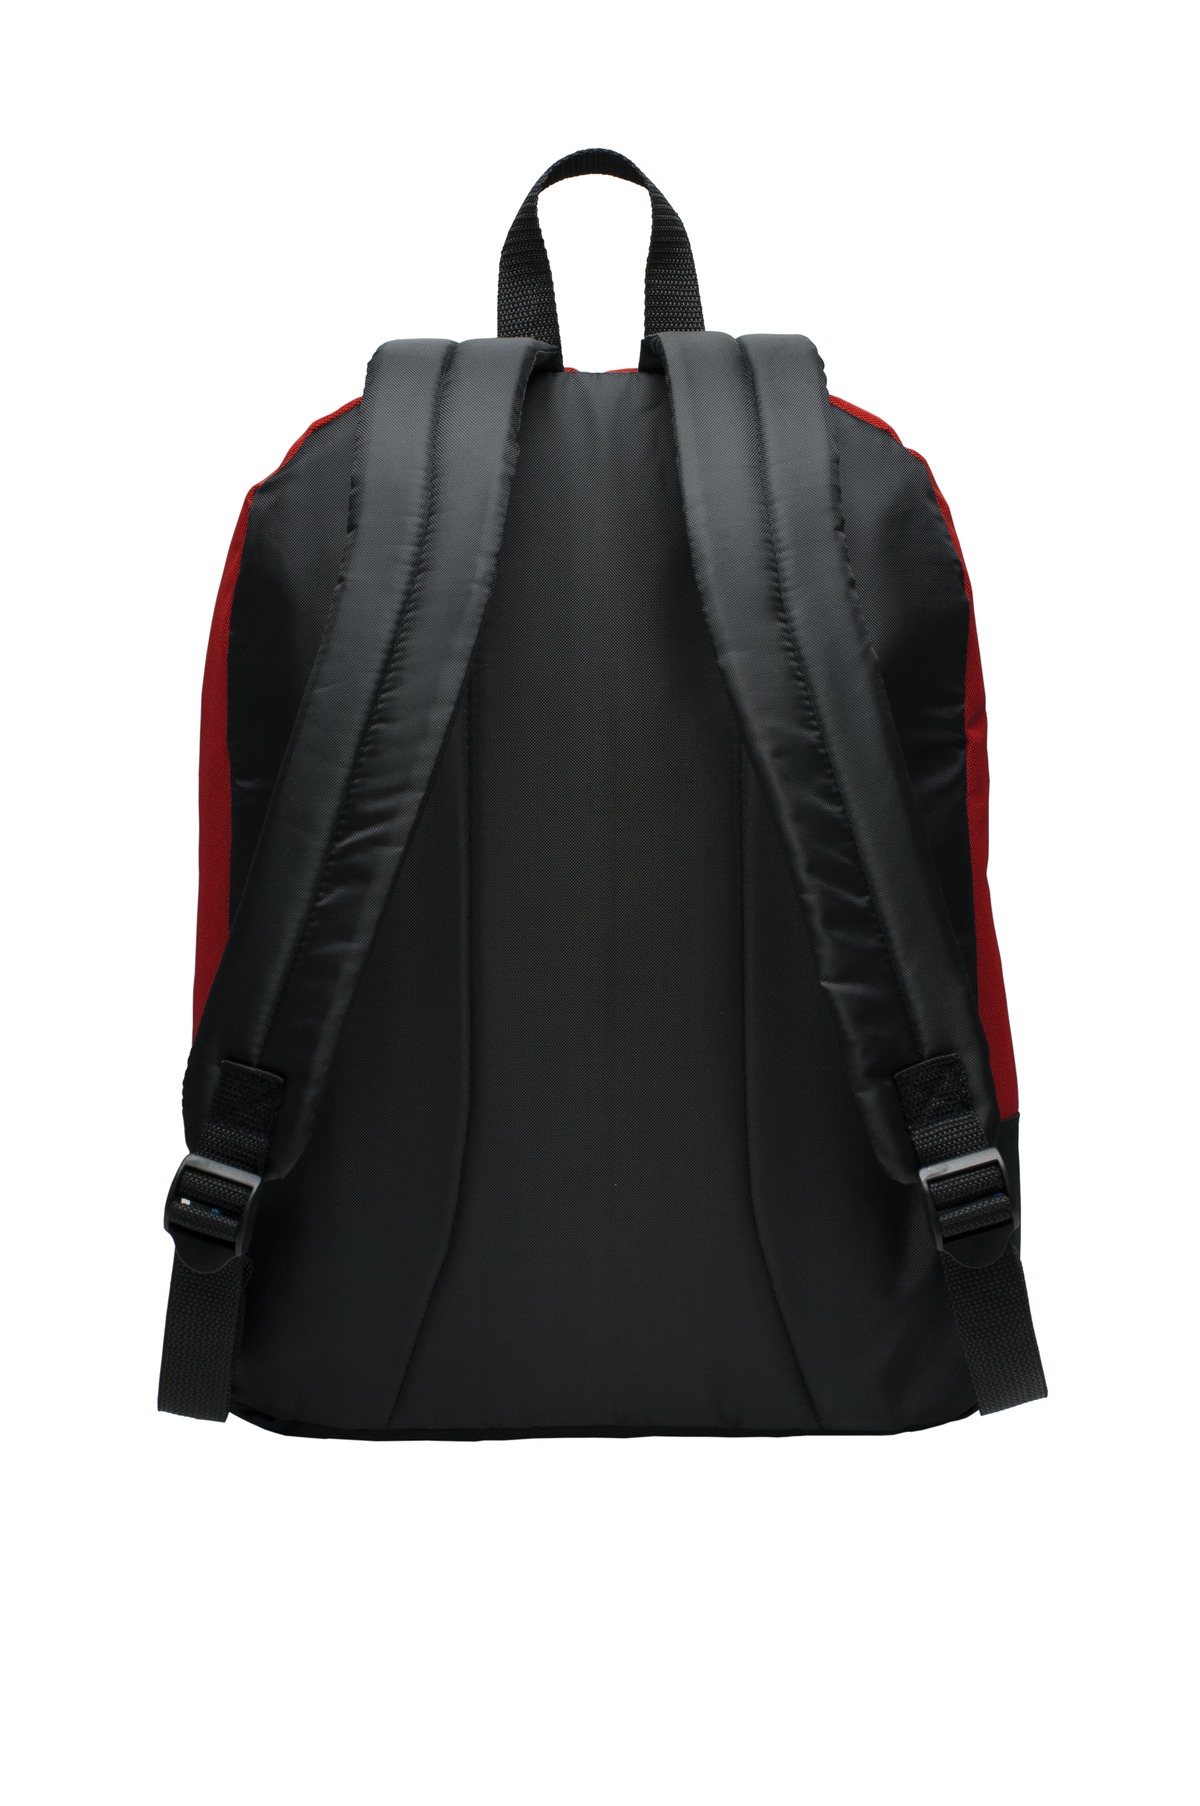 Basic Comfortable Backpack - image 2 of 2